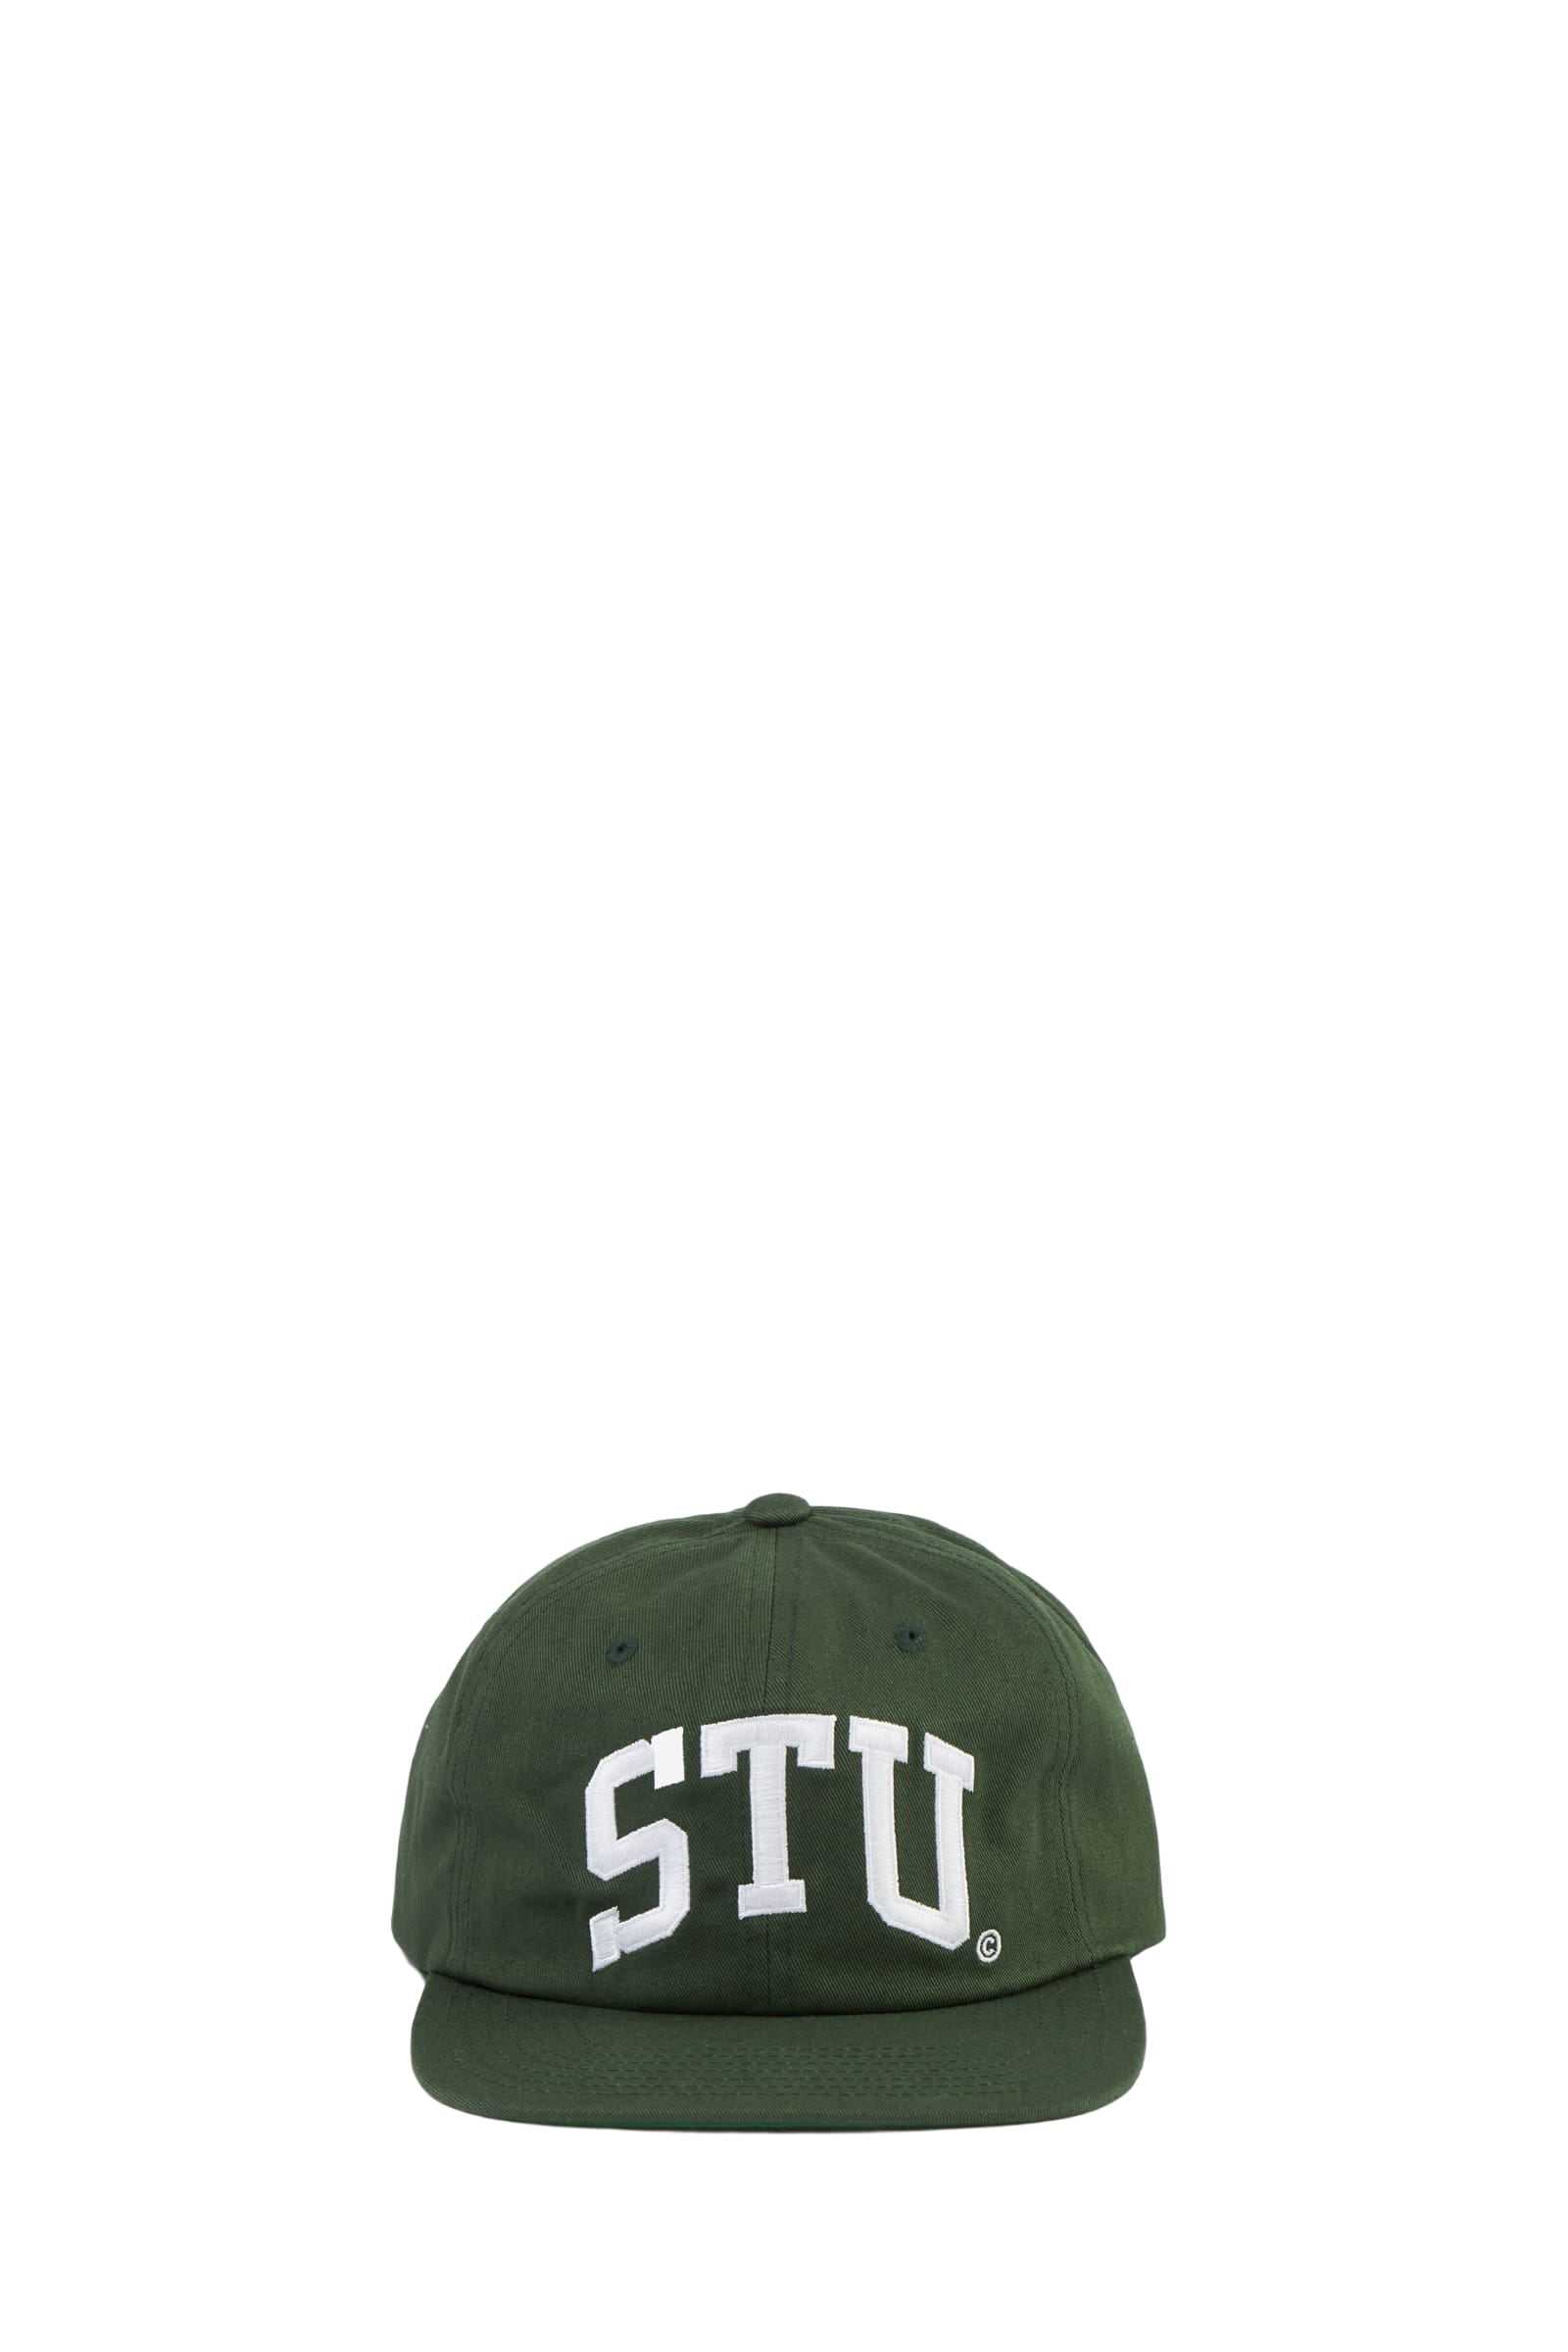 Stussy Stu Arch Strapback Hats | italist